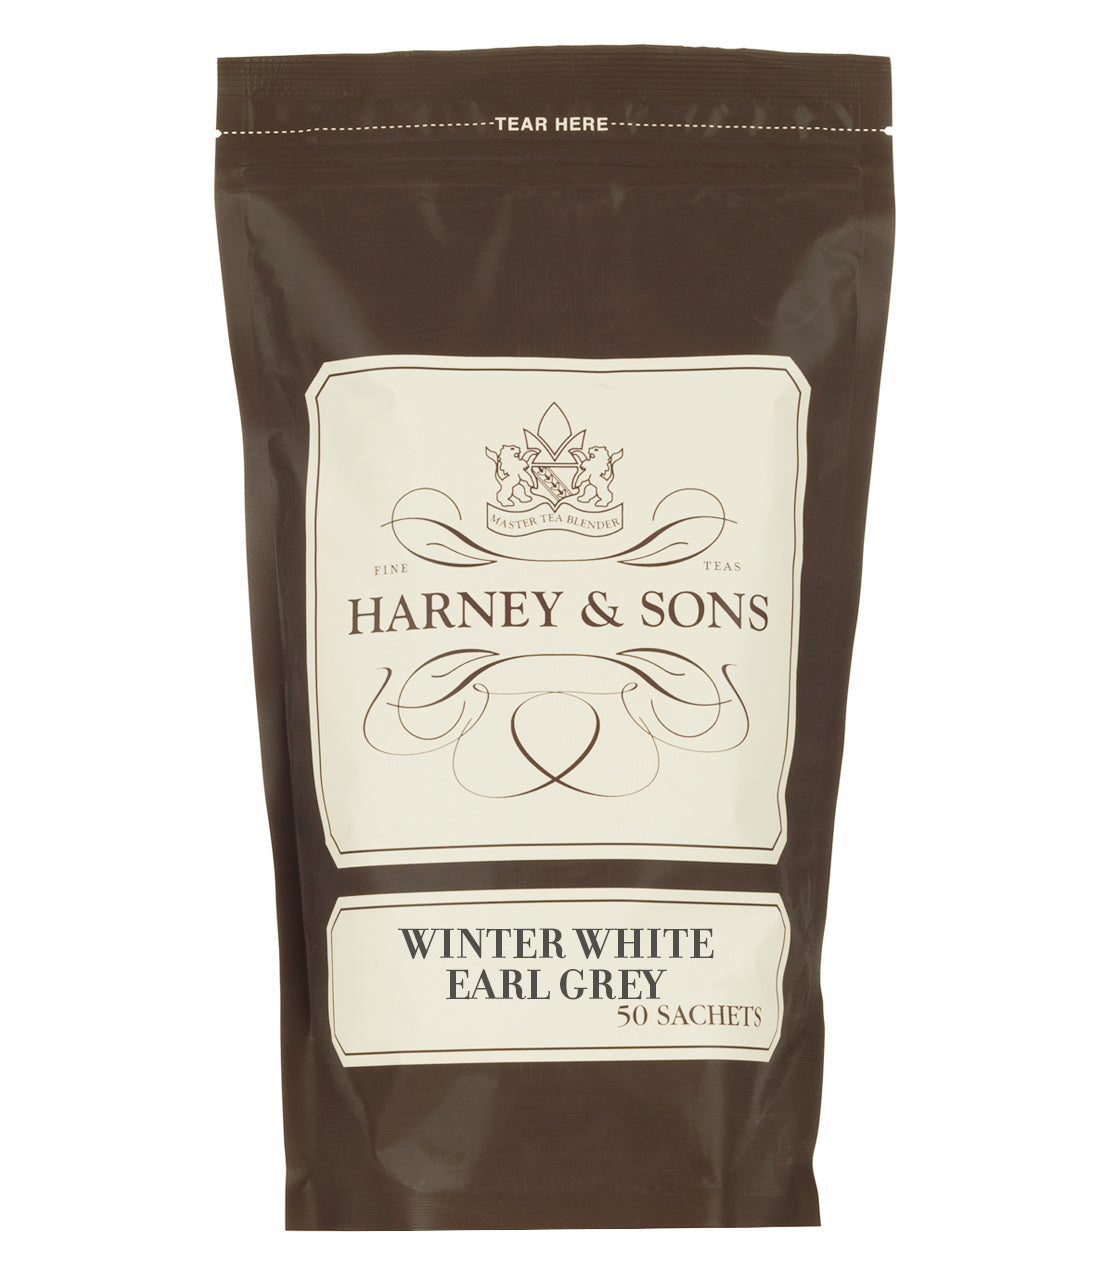 Winter White Earl Grey - Sachets Bag of 50 Sachets - Harney & Sons Fine Teas